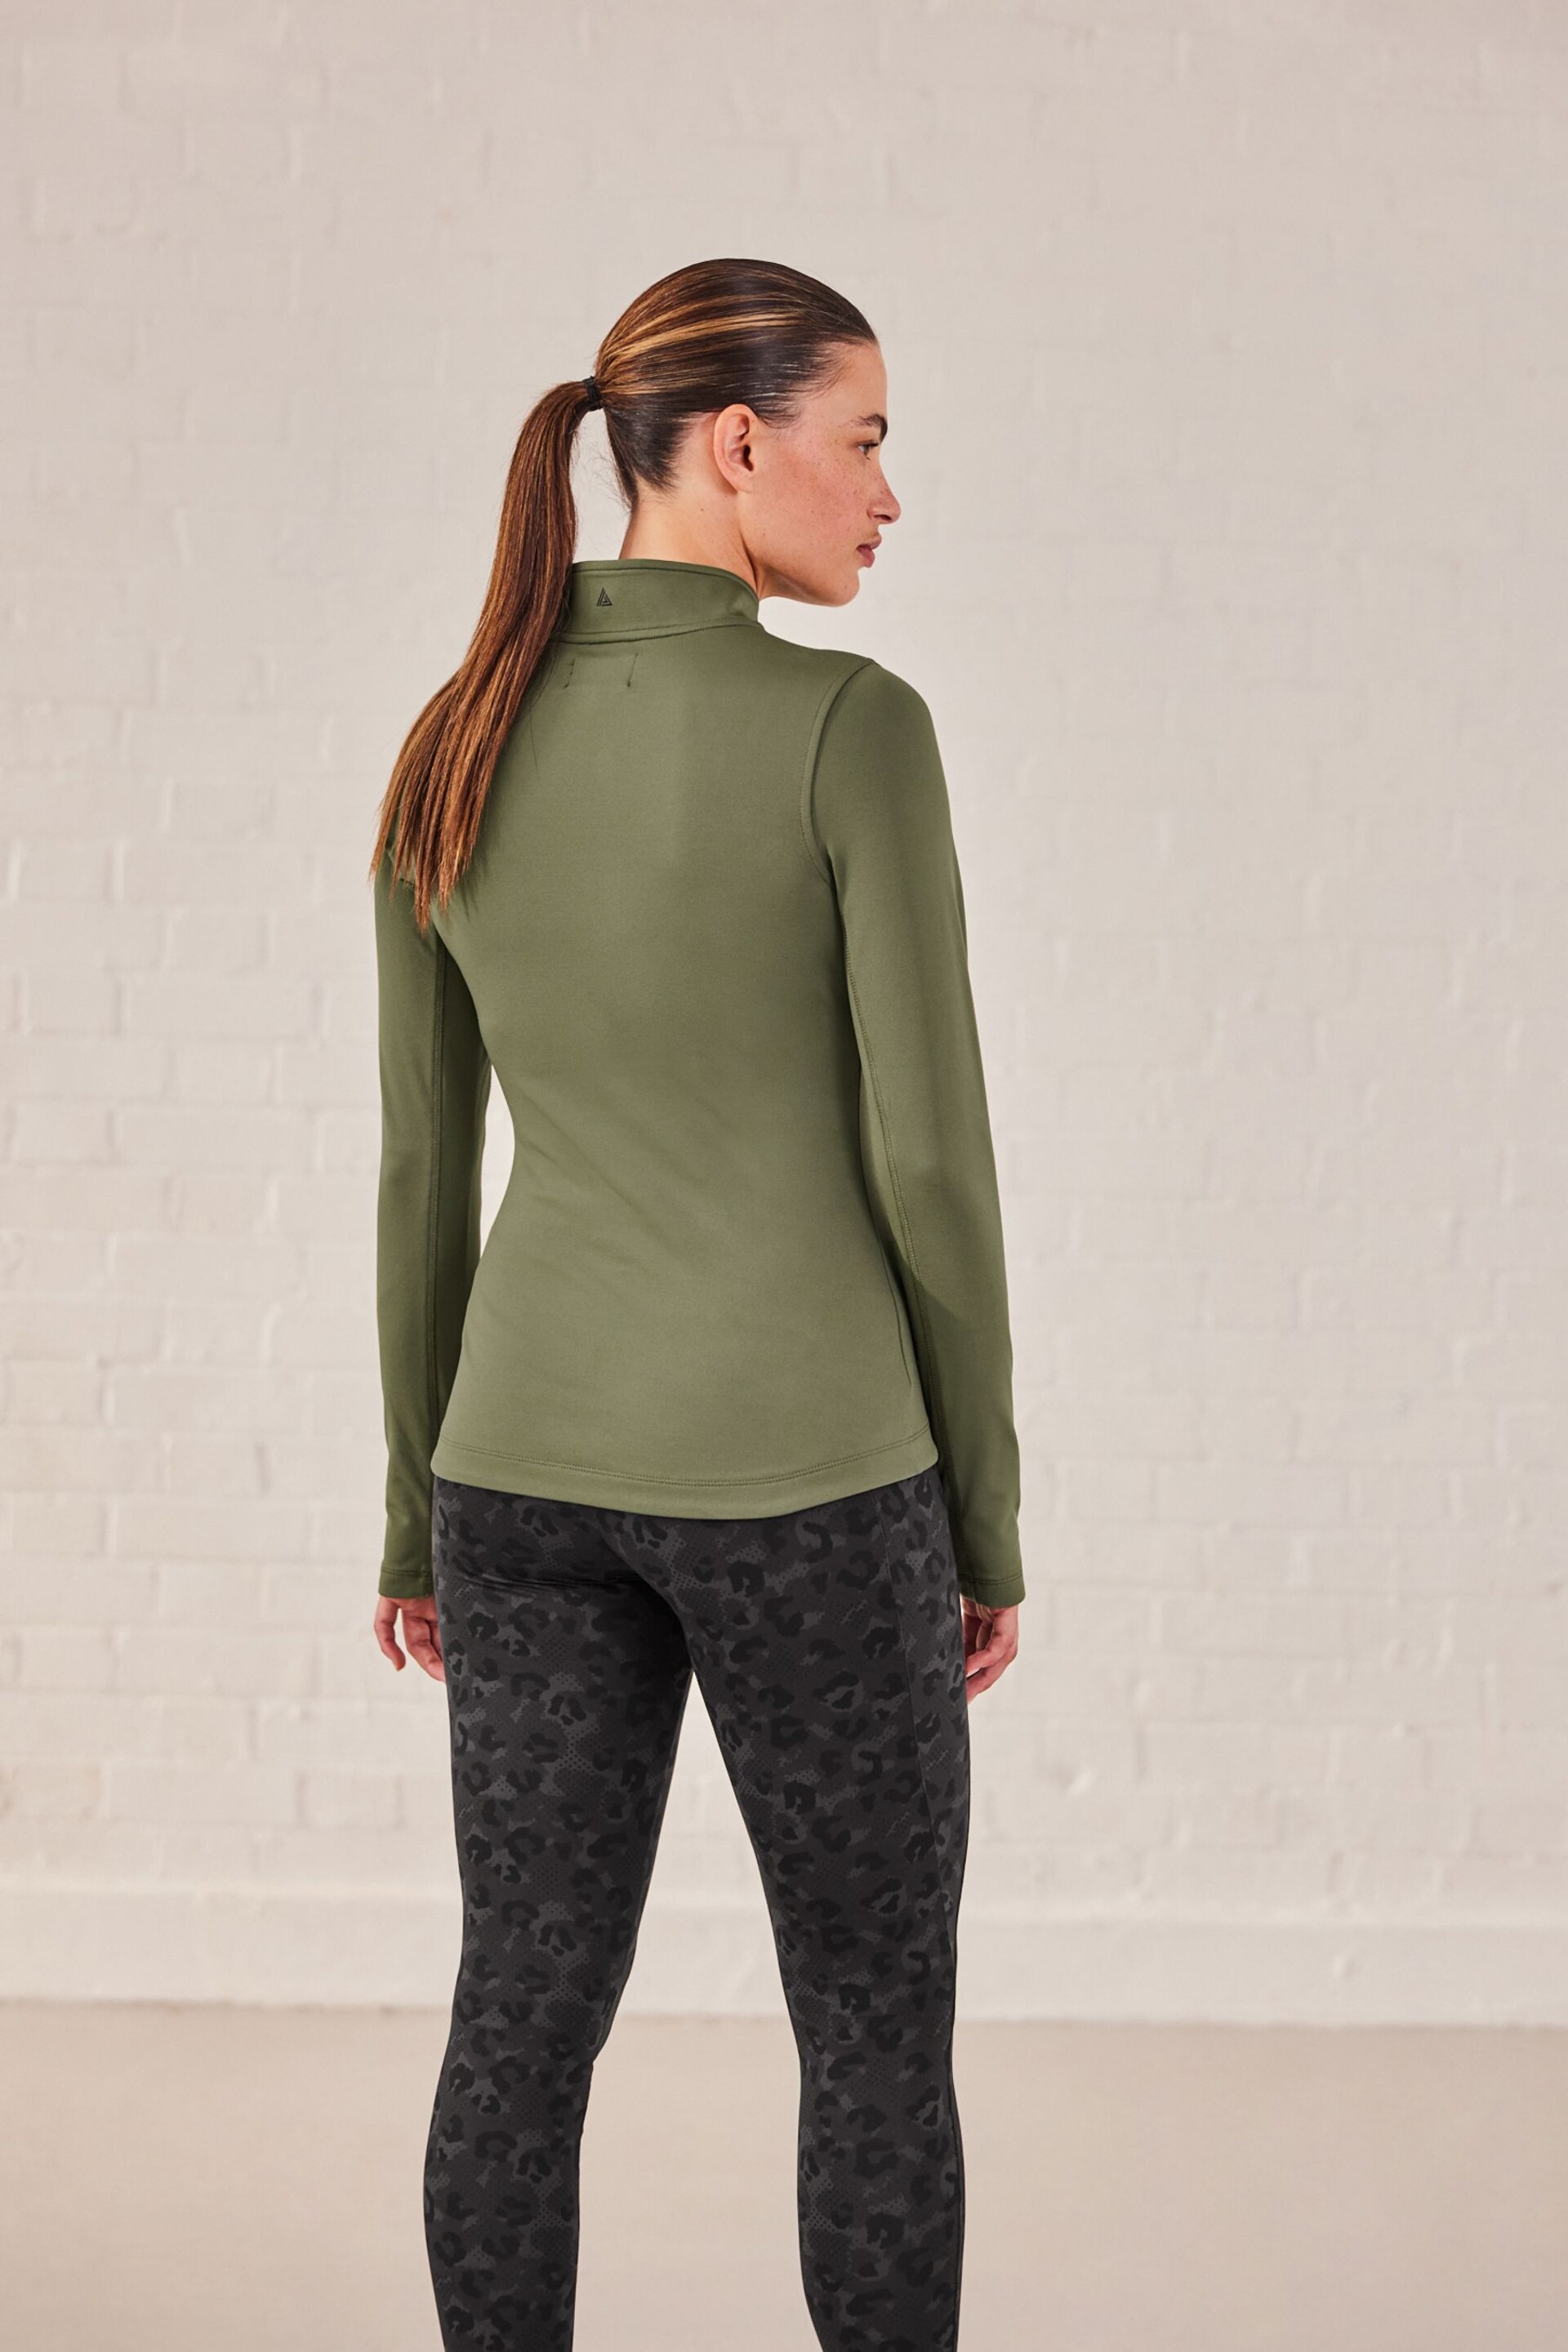 Khaki Green Elements Outdoor Fleece Lined Layer Top - Image 3 of 7